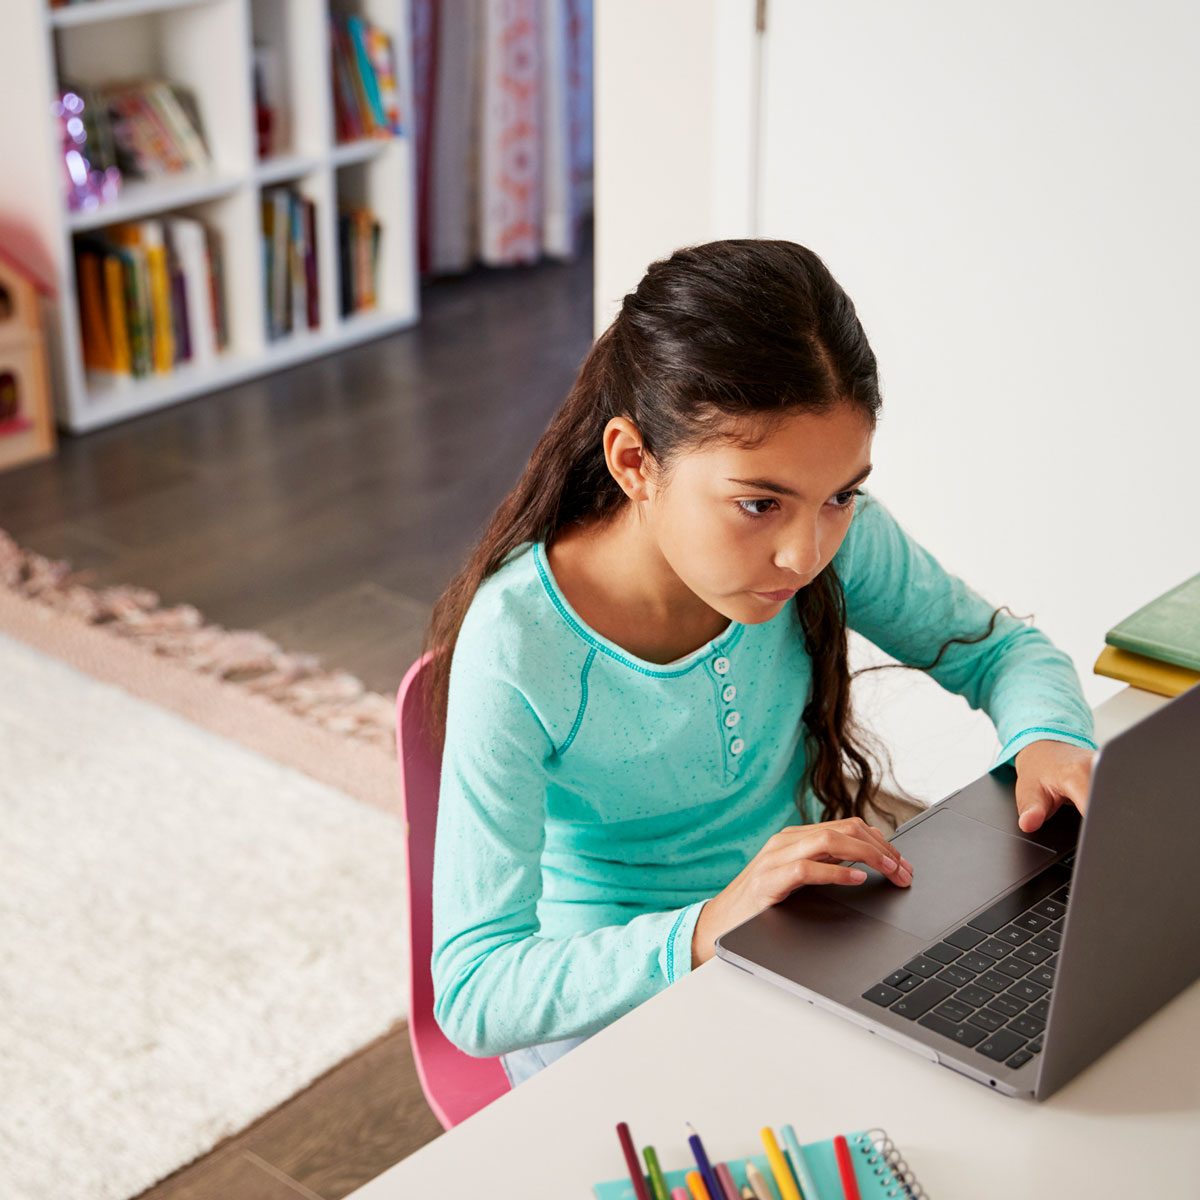 Kids Desks With Storage: 9 Great Ideas